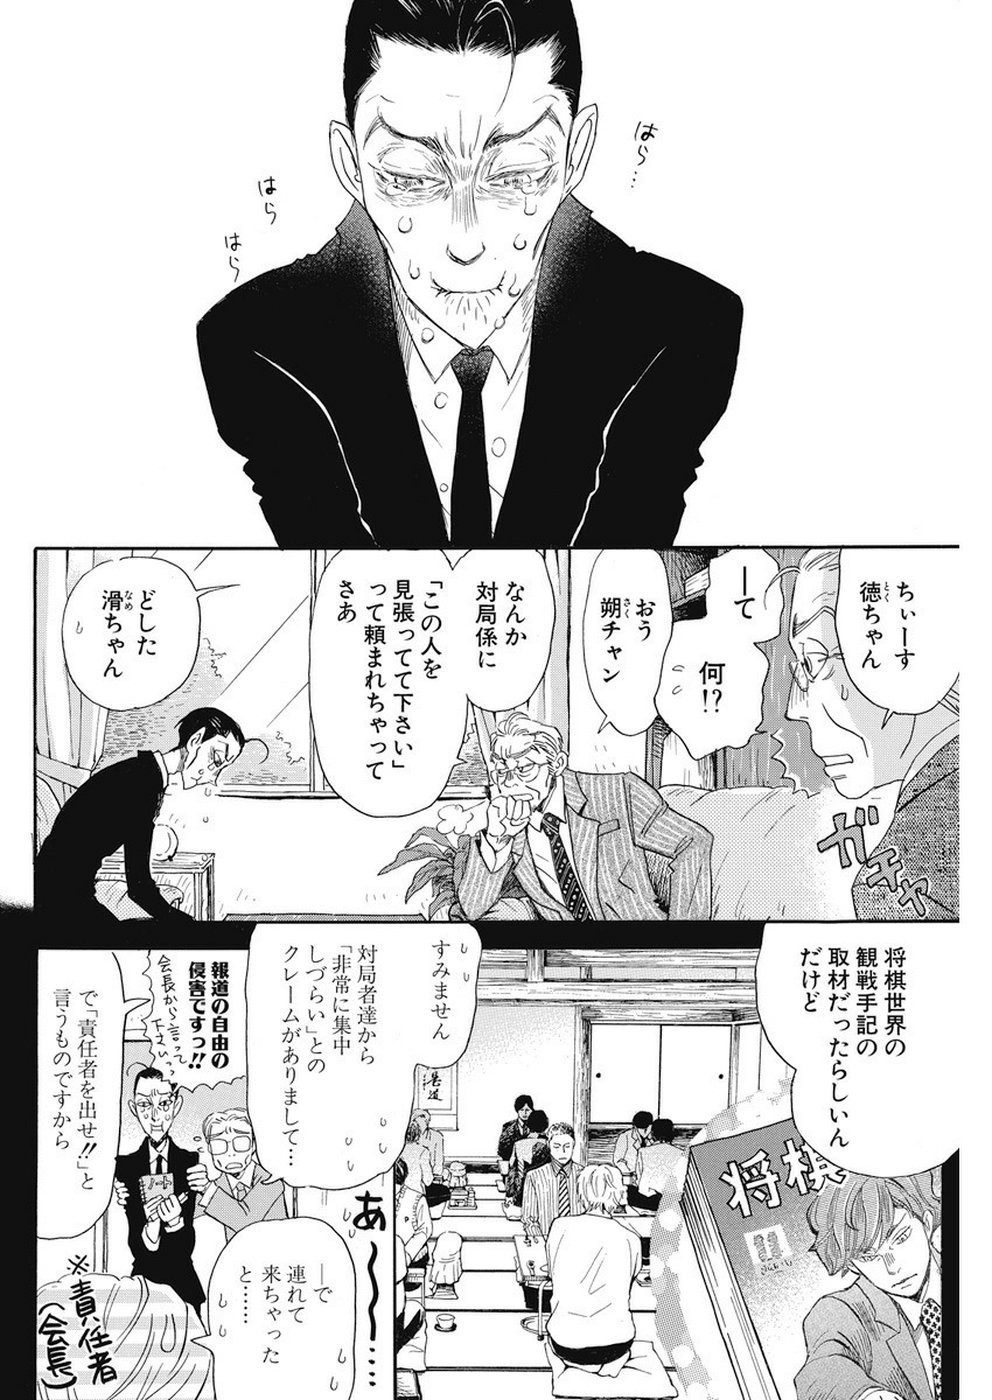 3 Gatsu no Lion - Chapter 162 - Page 2